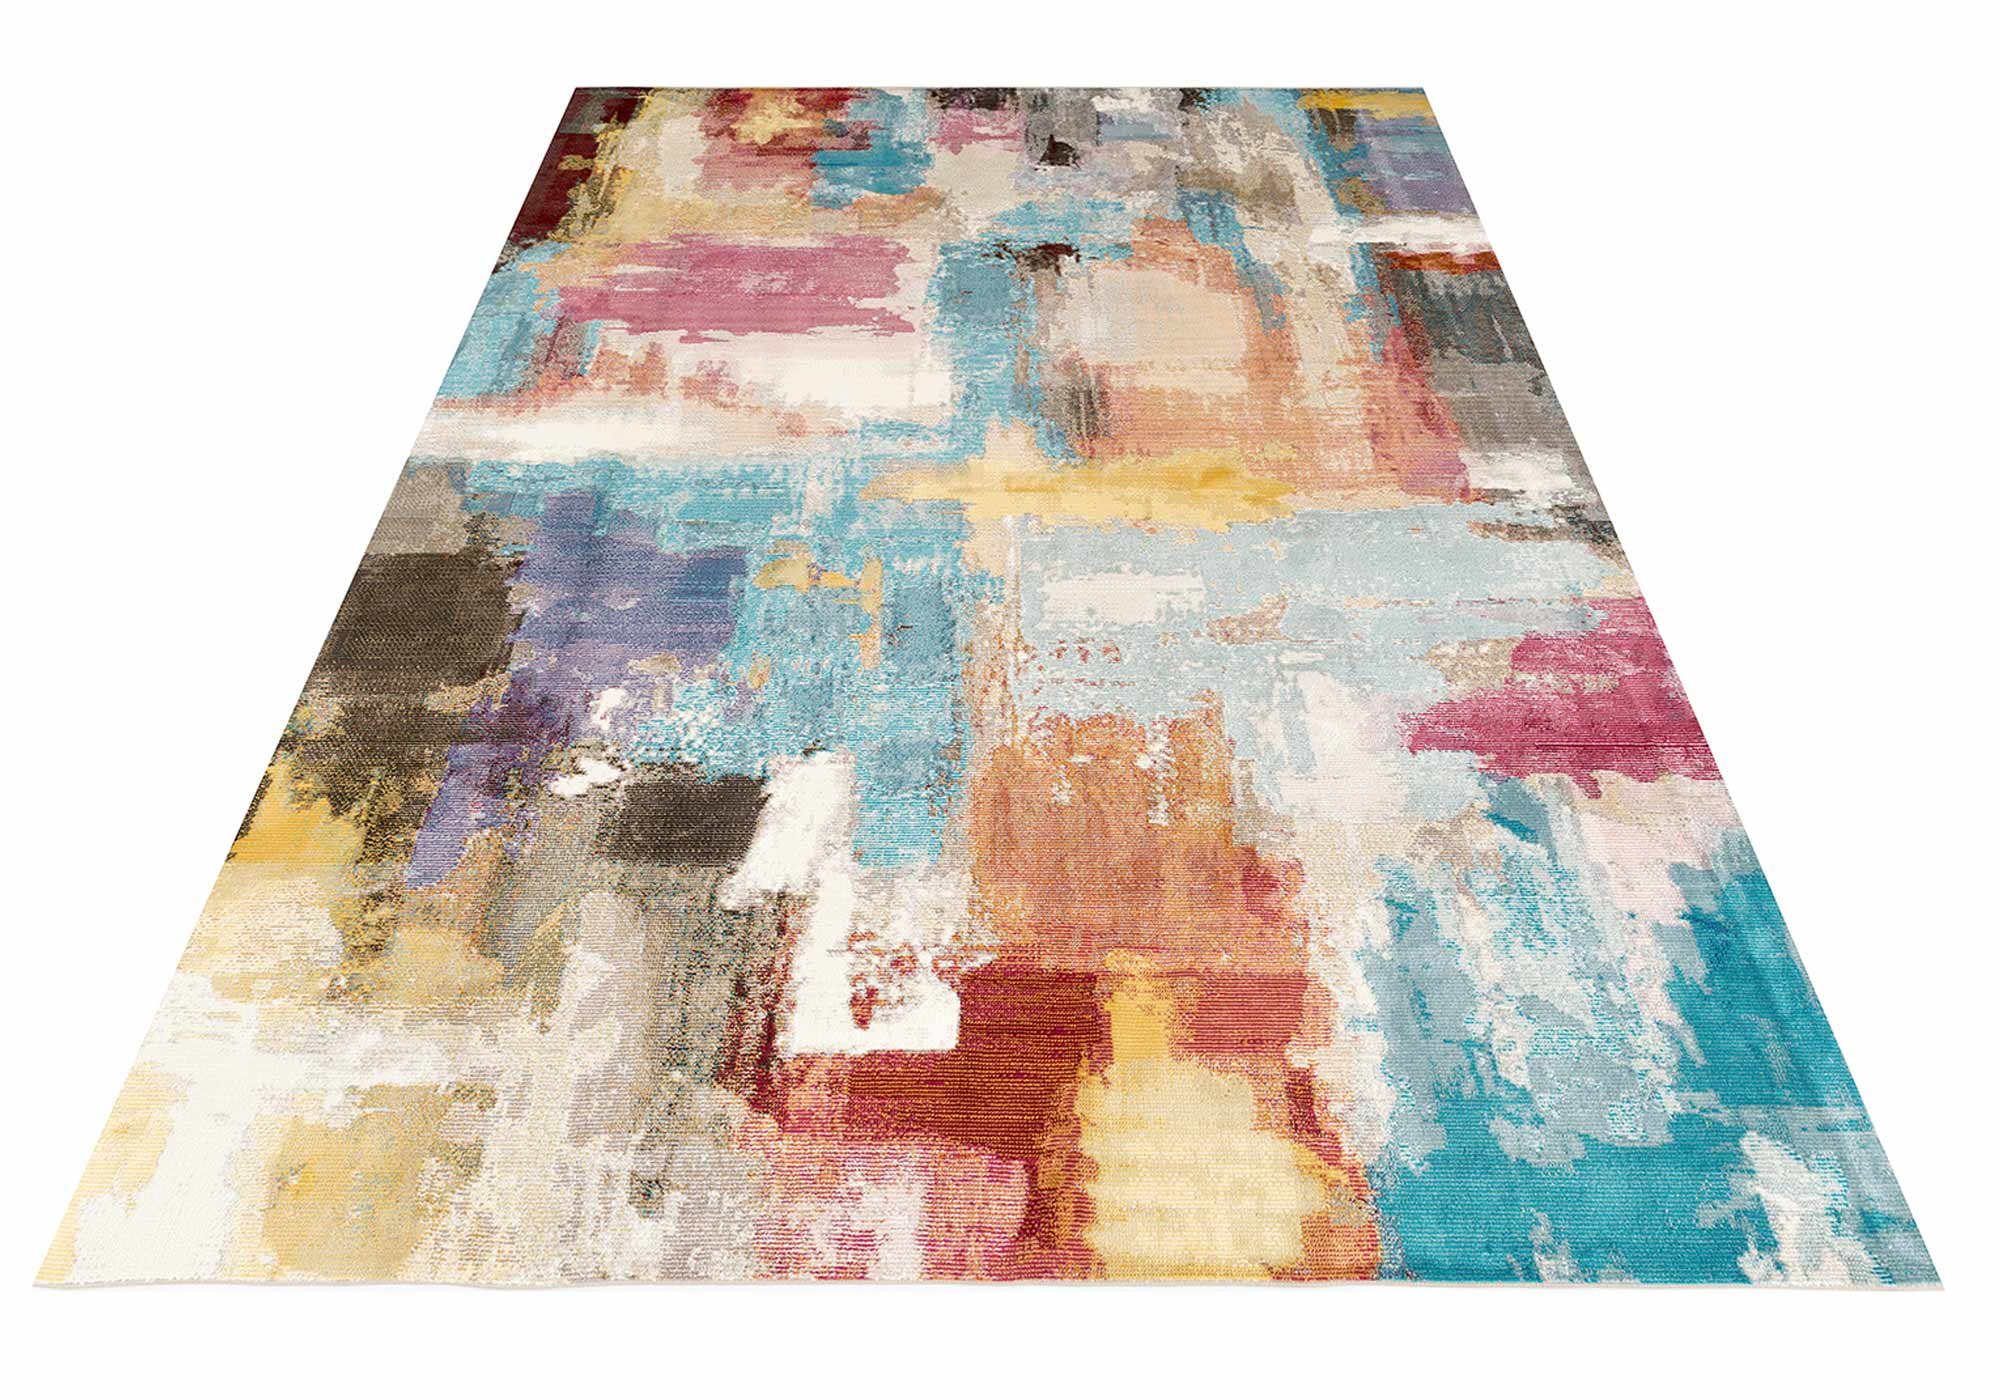 Festival Teppich 240 x 290 cm - mehrfarbig - 6 mm Höhe - Picasso 598